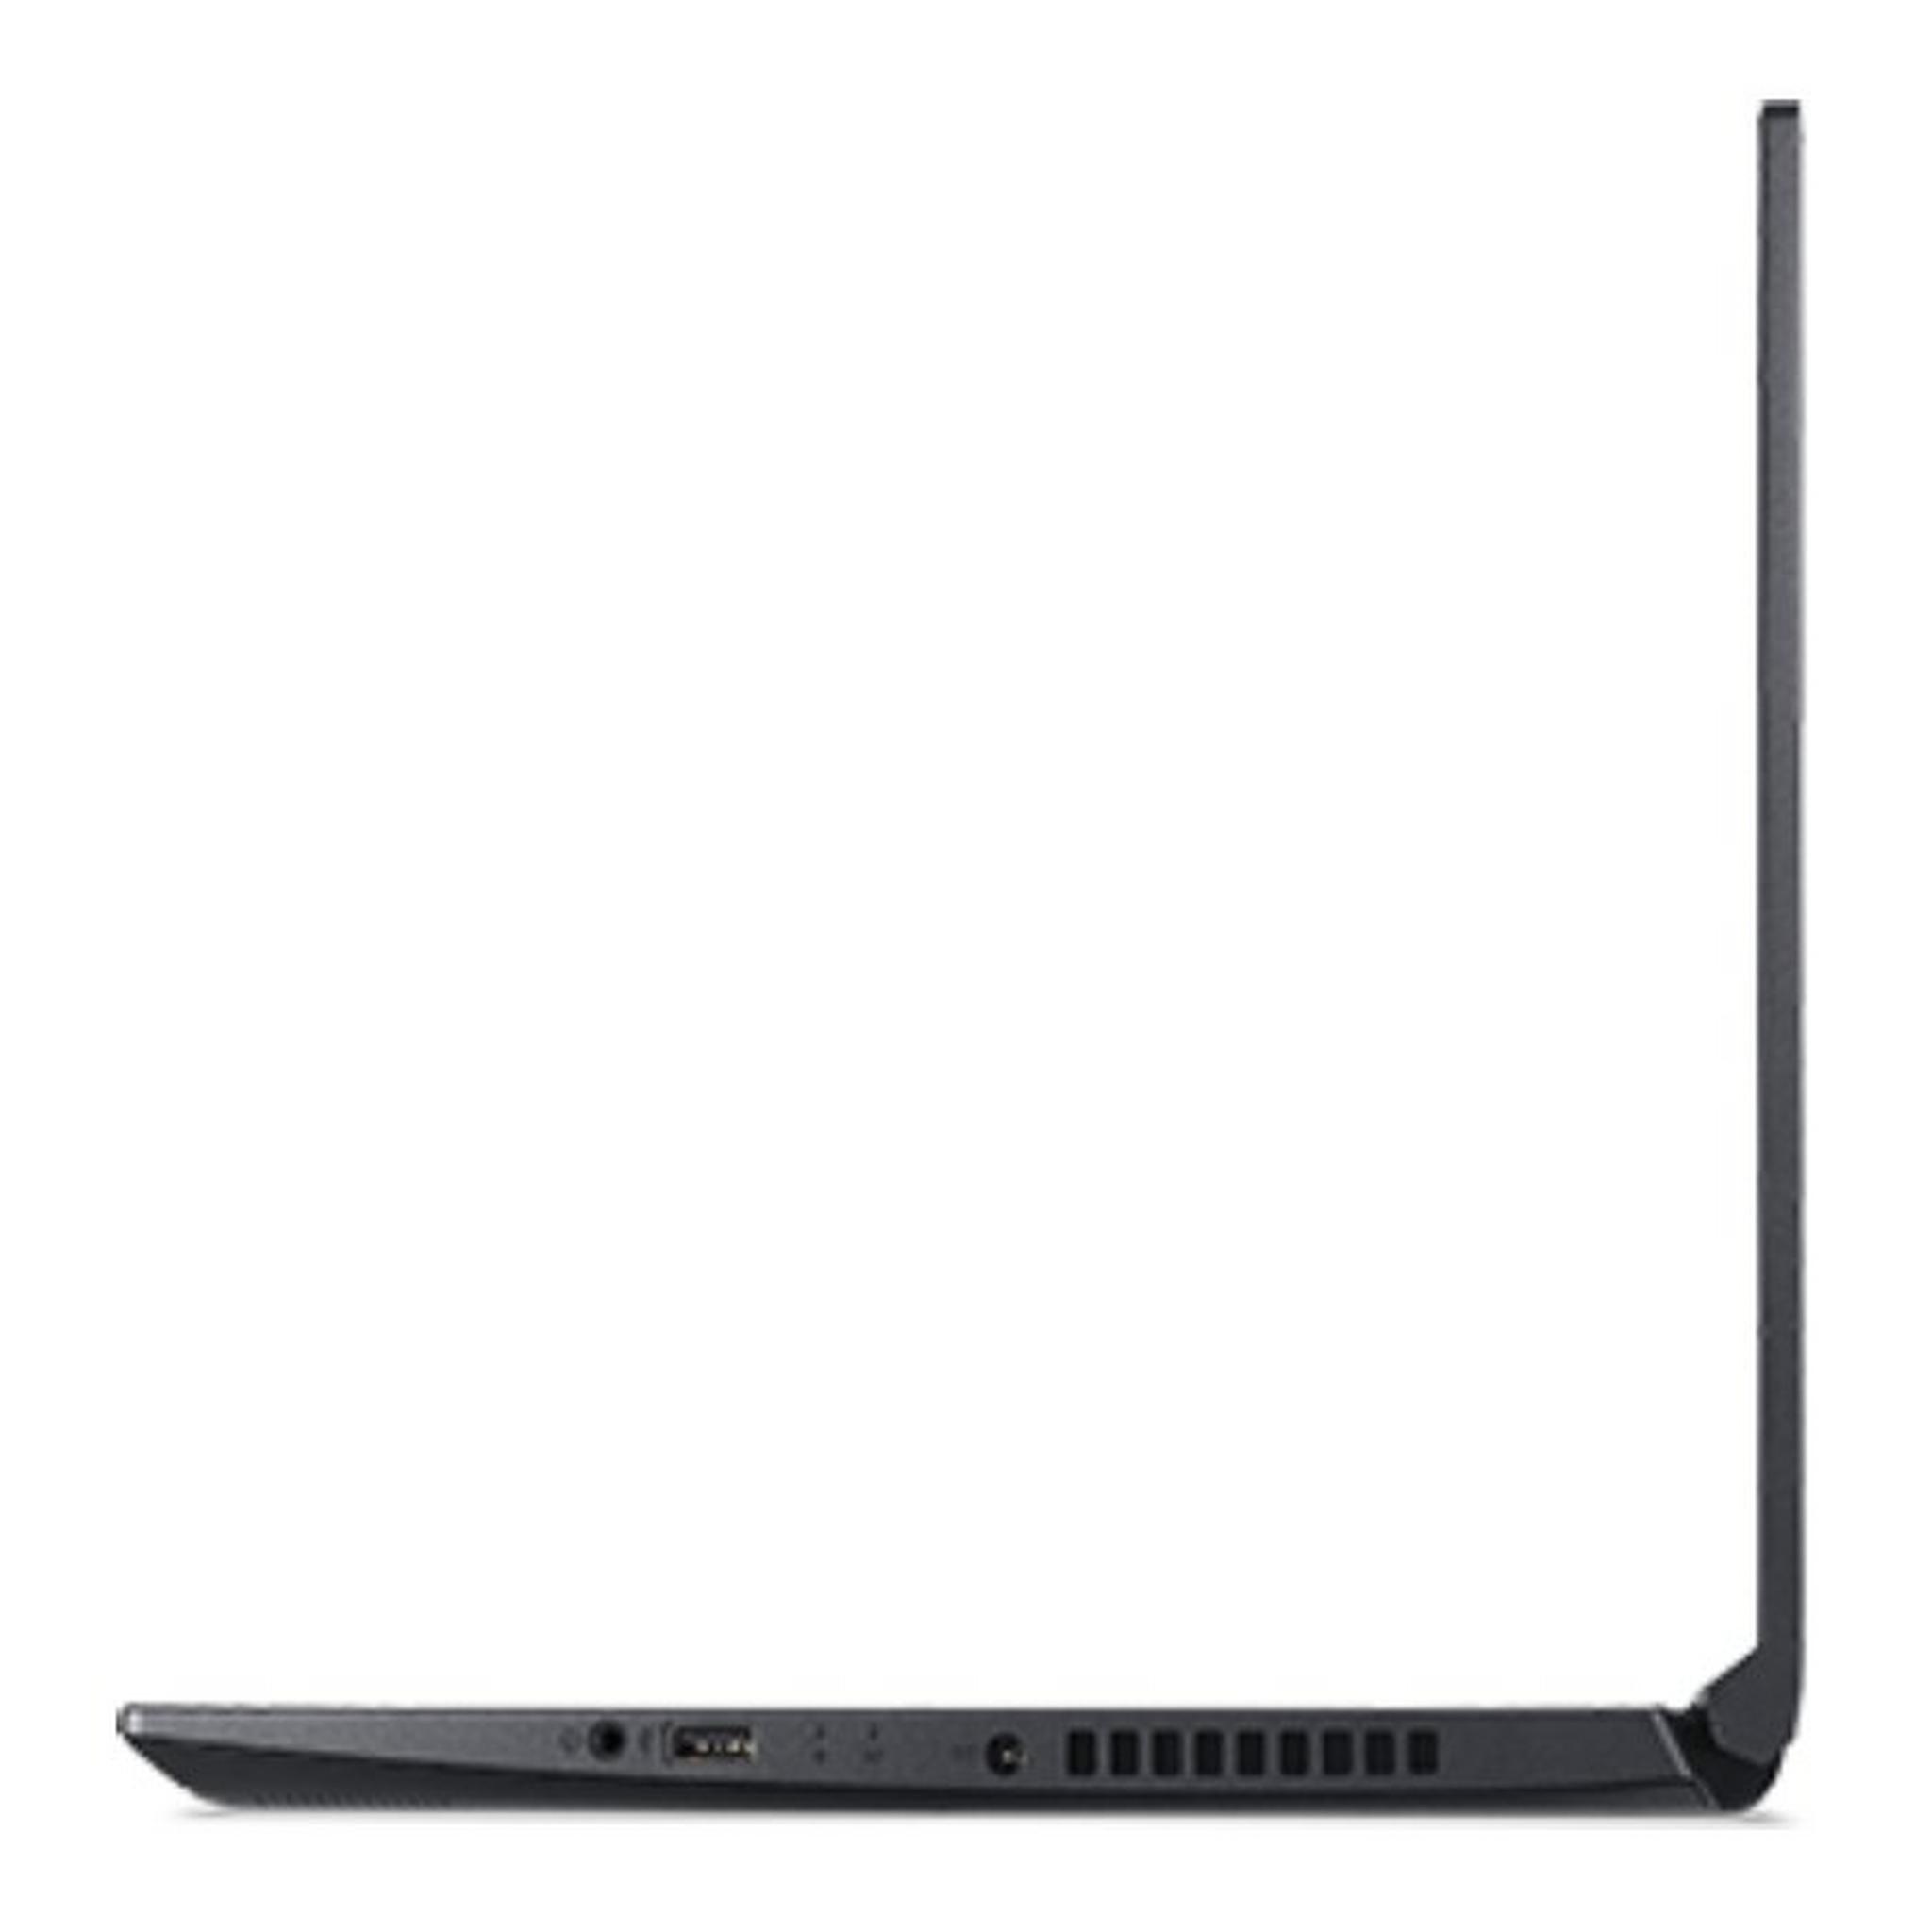 Acer Aspire 7 GeForce GTX 1650 4GB Core i5 10300H 8GB RAM 512GB SSD 15.6" Gaming Laptop - Black